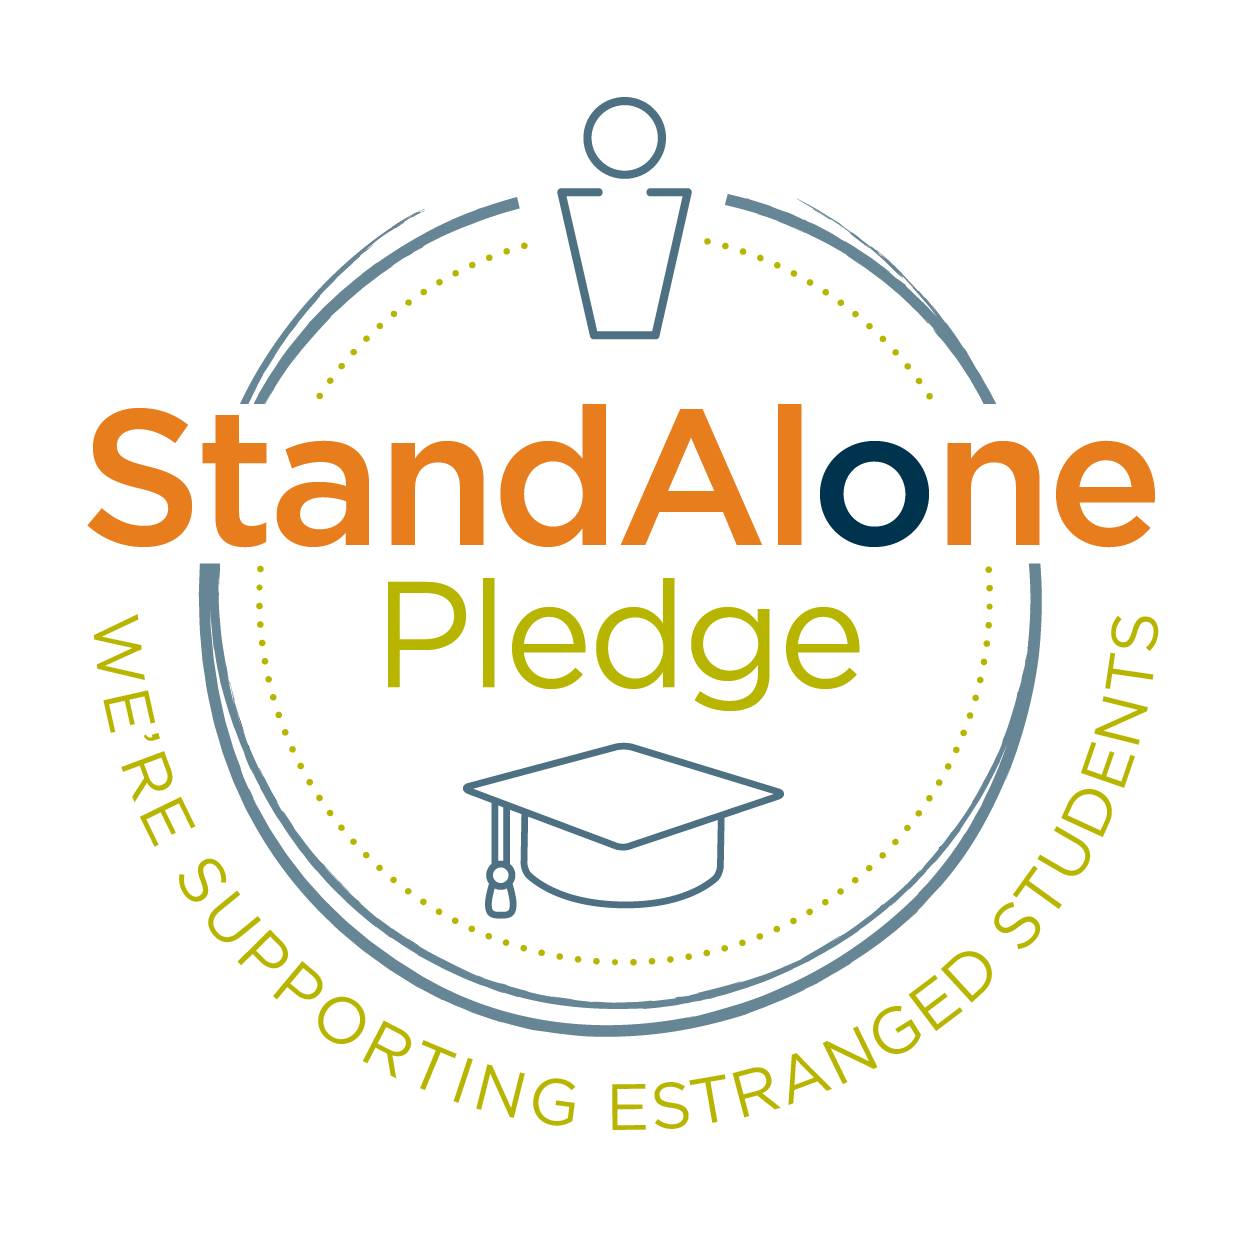 Logo Addewid Stand Alone 